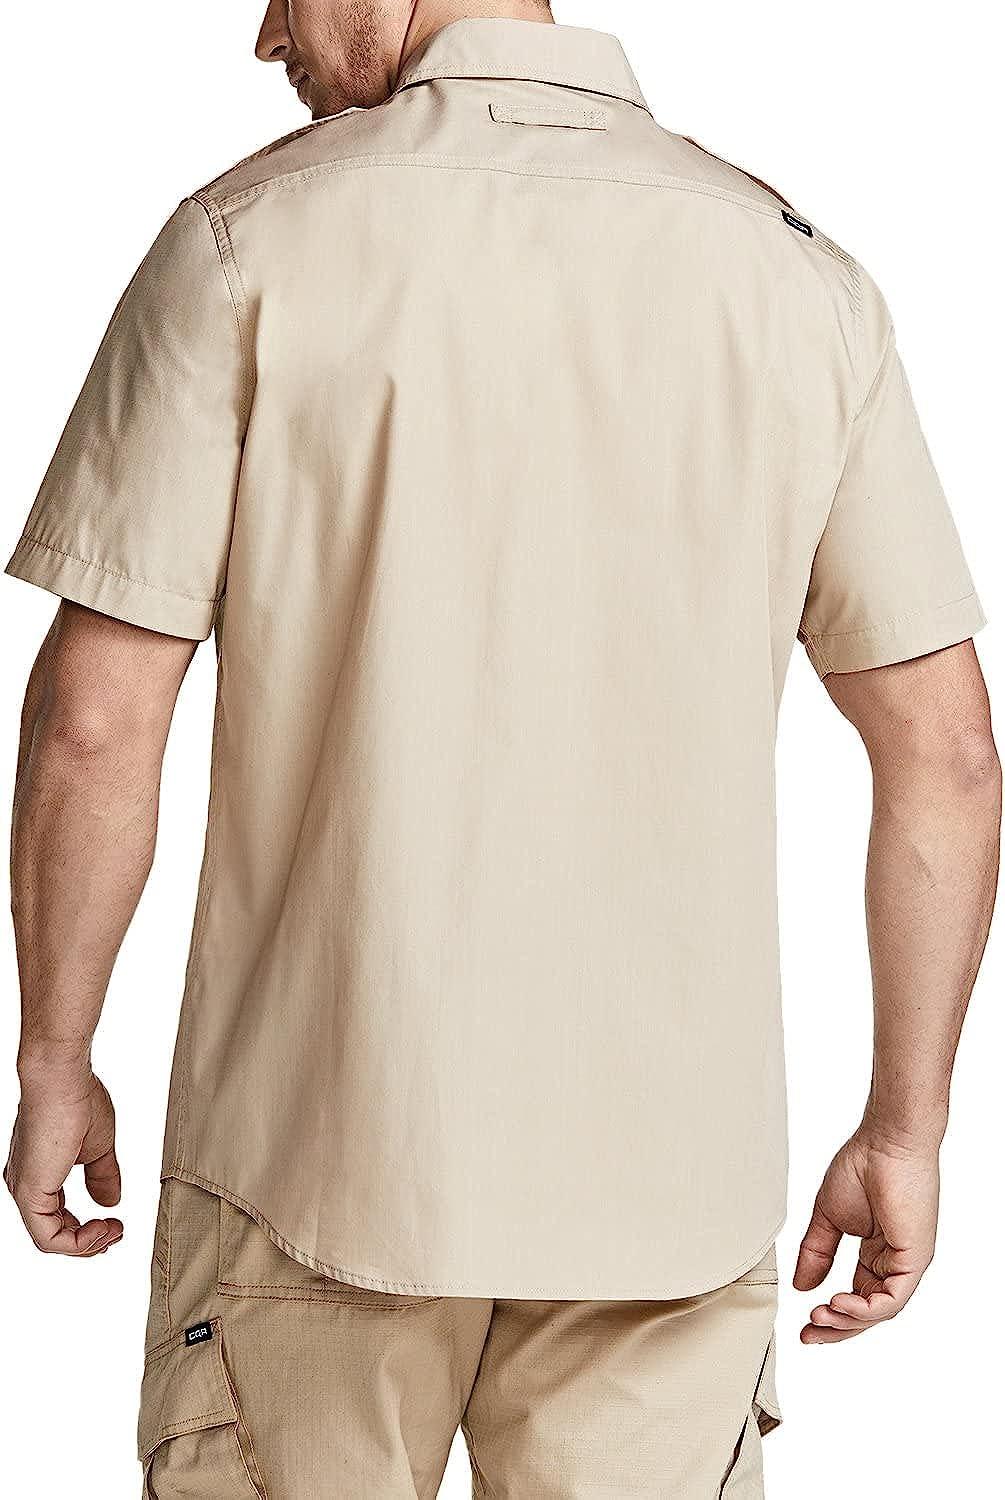 Men's Outdoor Tactical Long Sleeve Polo Shirts Quick Dry - Khaki / S